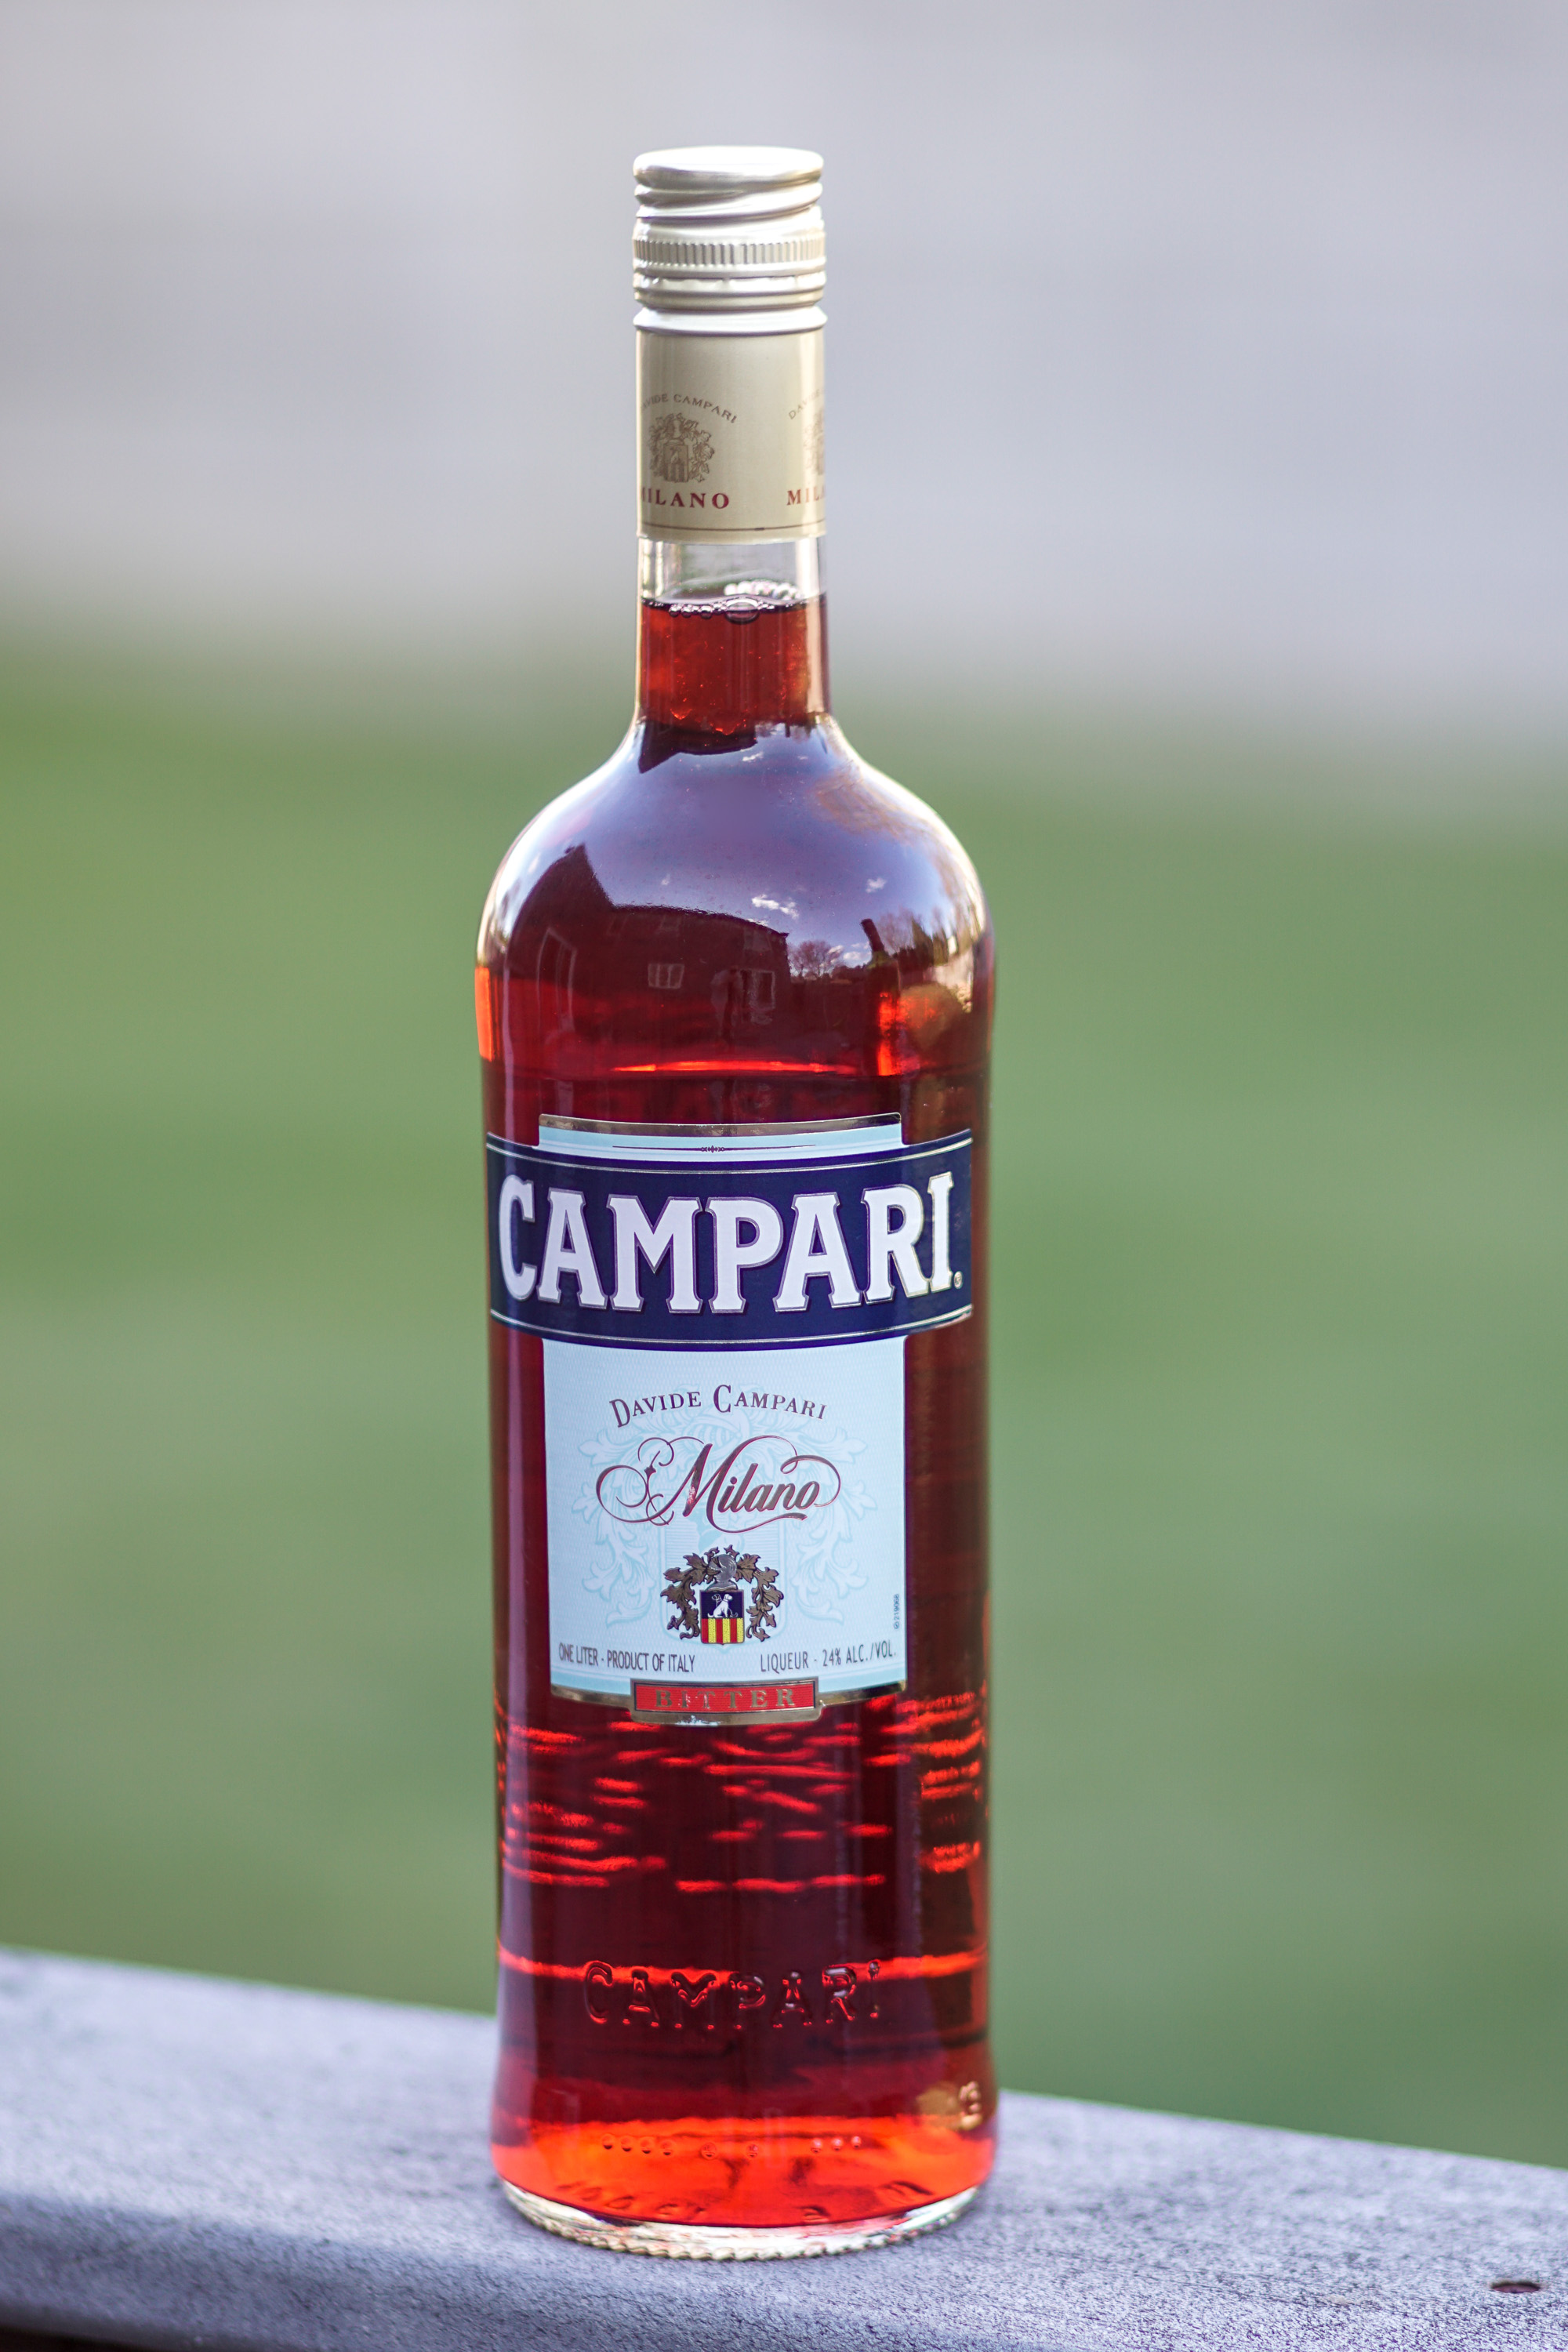 https://upload.wikimedia.org/wikipedia/commons/8/86/Bottle_of_Campari_%28United_States%29.jpg